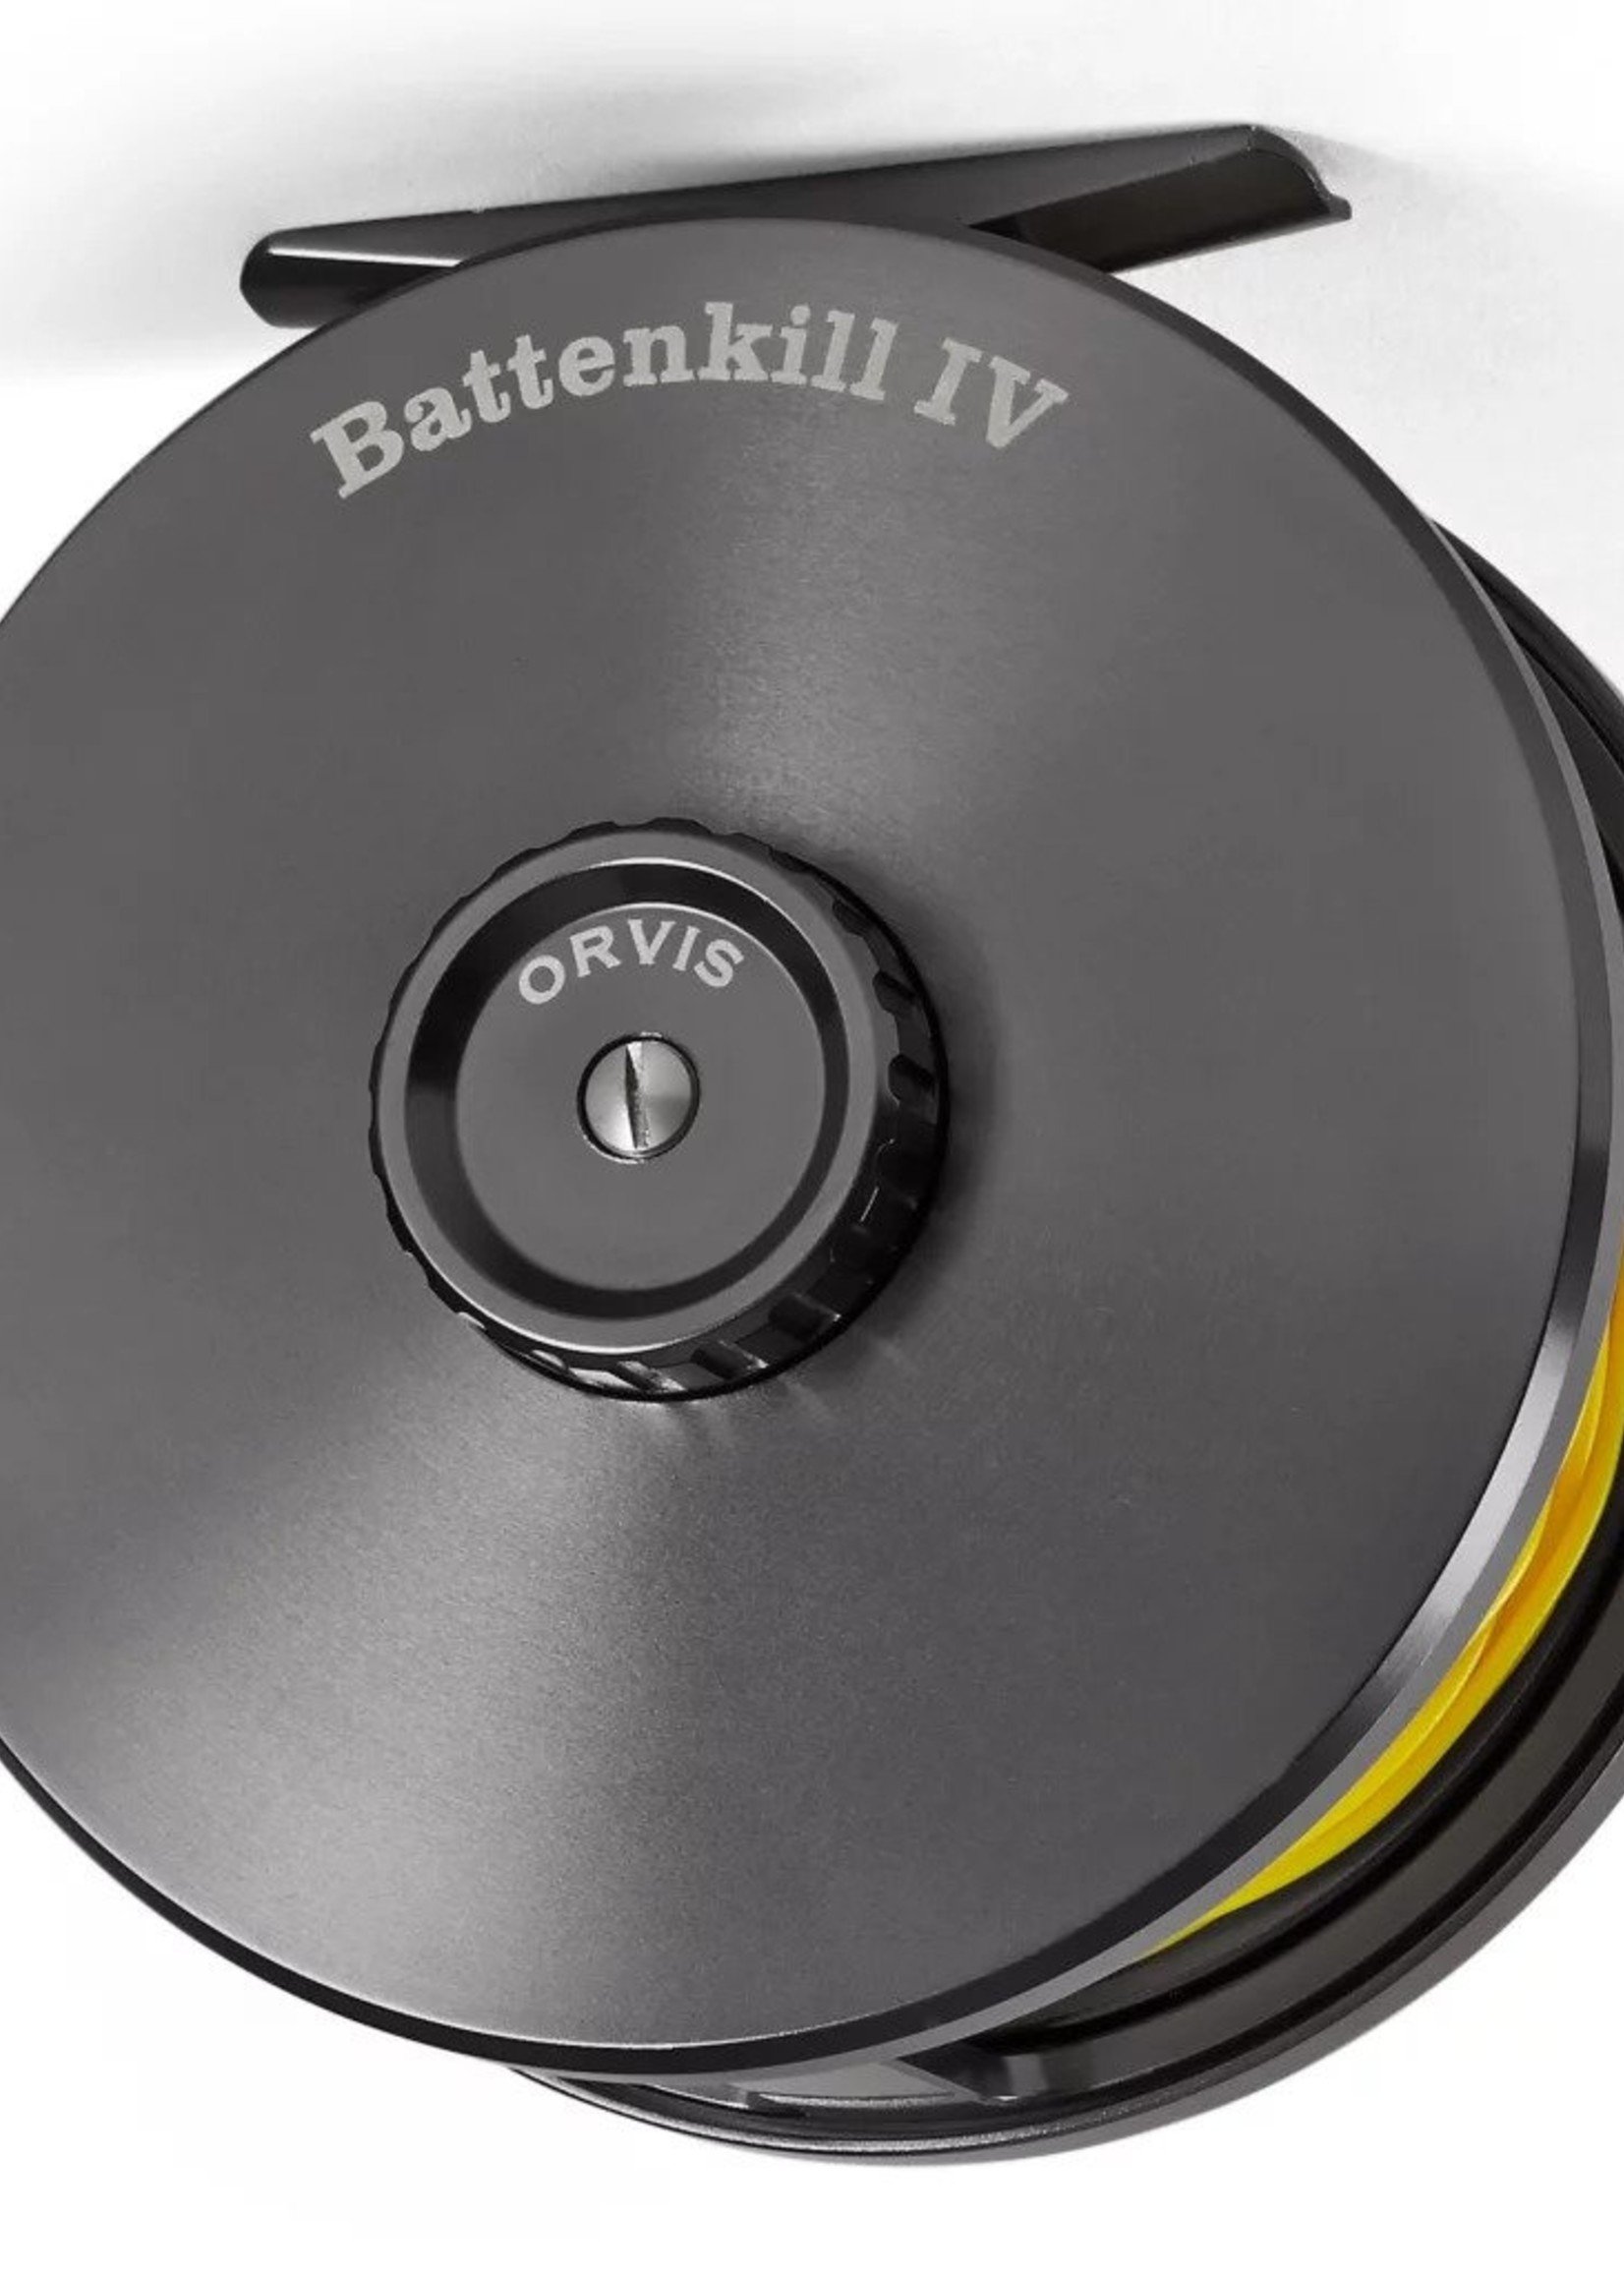 Orvis Battenkill Disc IV Spey Reel - Great Feathers